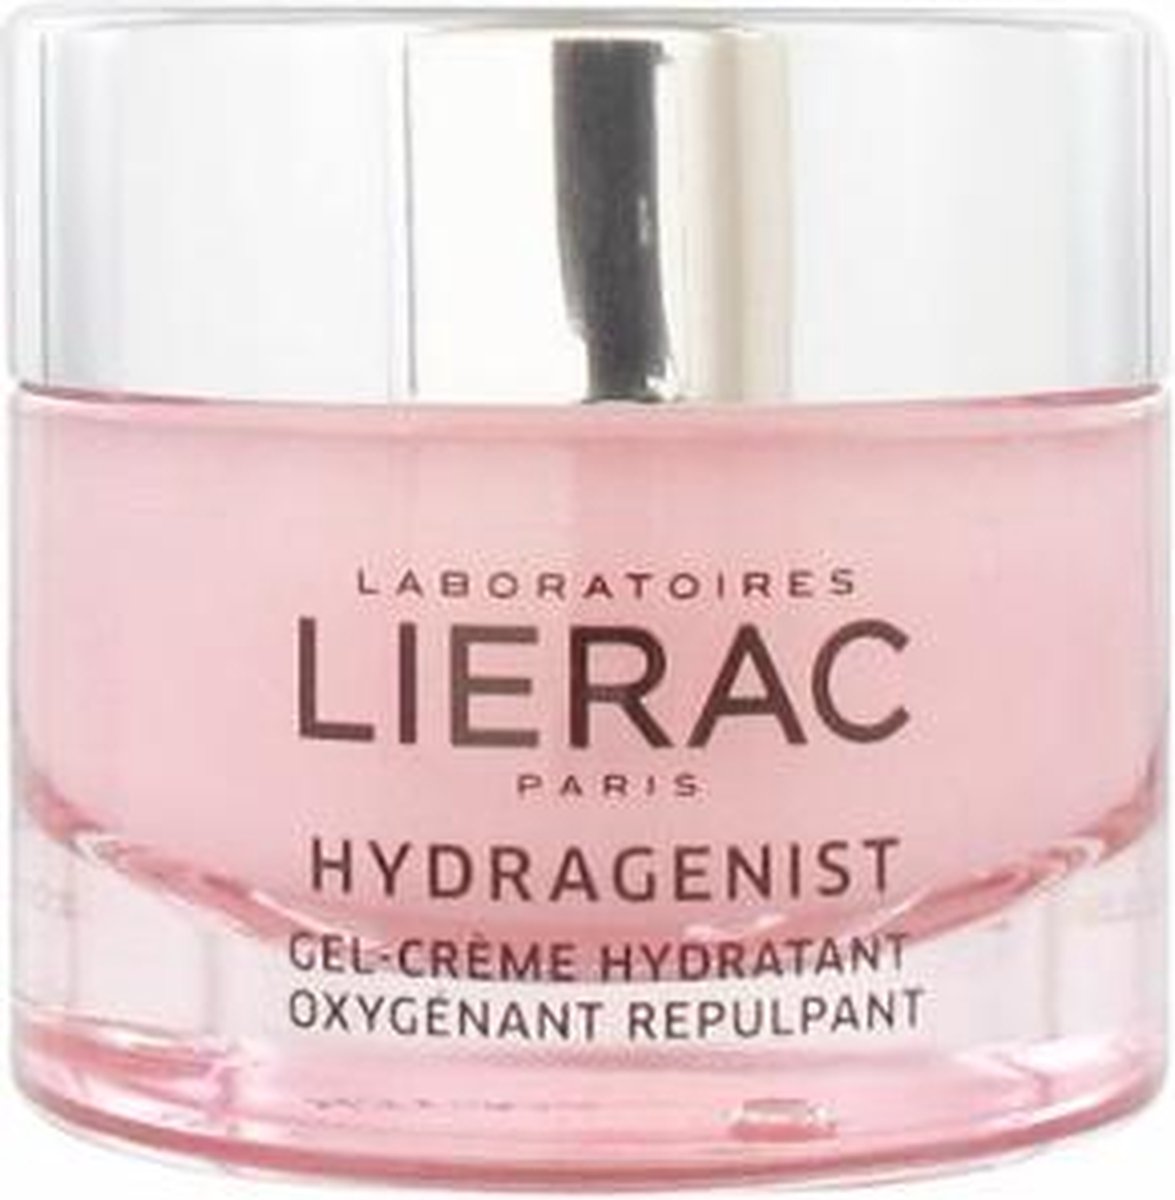 Lierac Visage Hydragenist Gel-Crème Hydratant Oxygénant